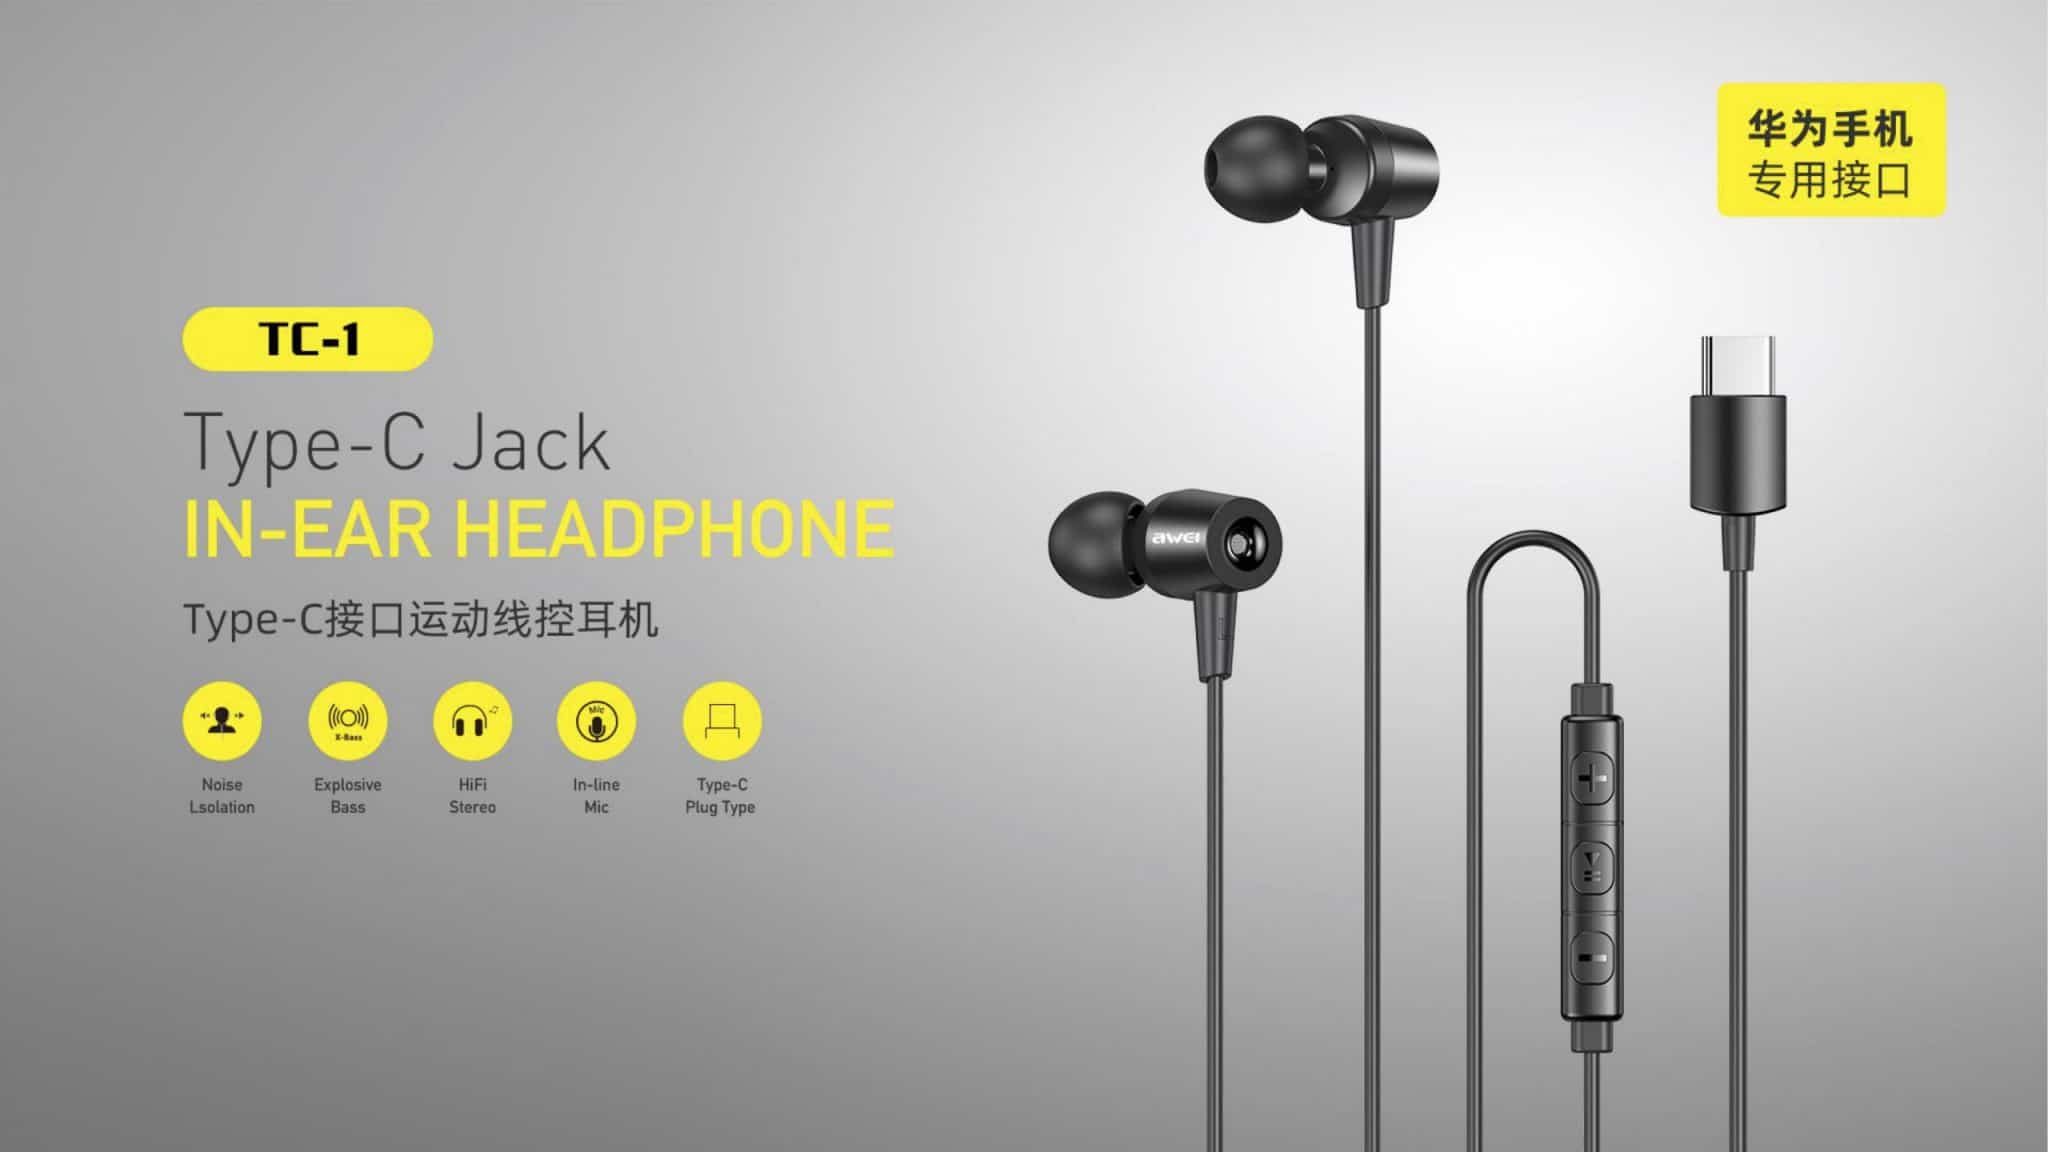 Awei Type-C Jack IN-EAR HEADPHONE TC-1